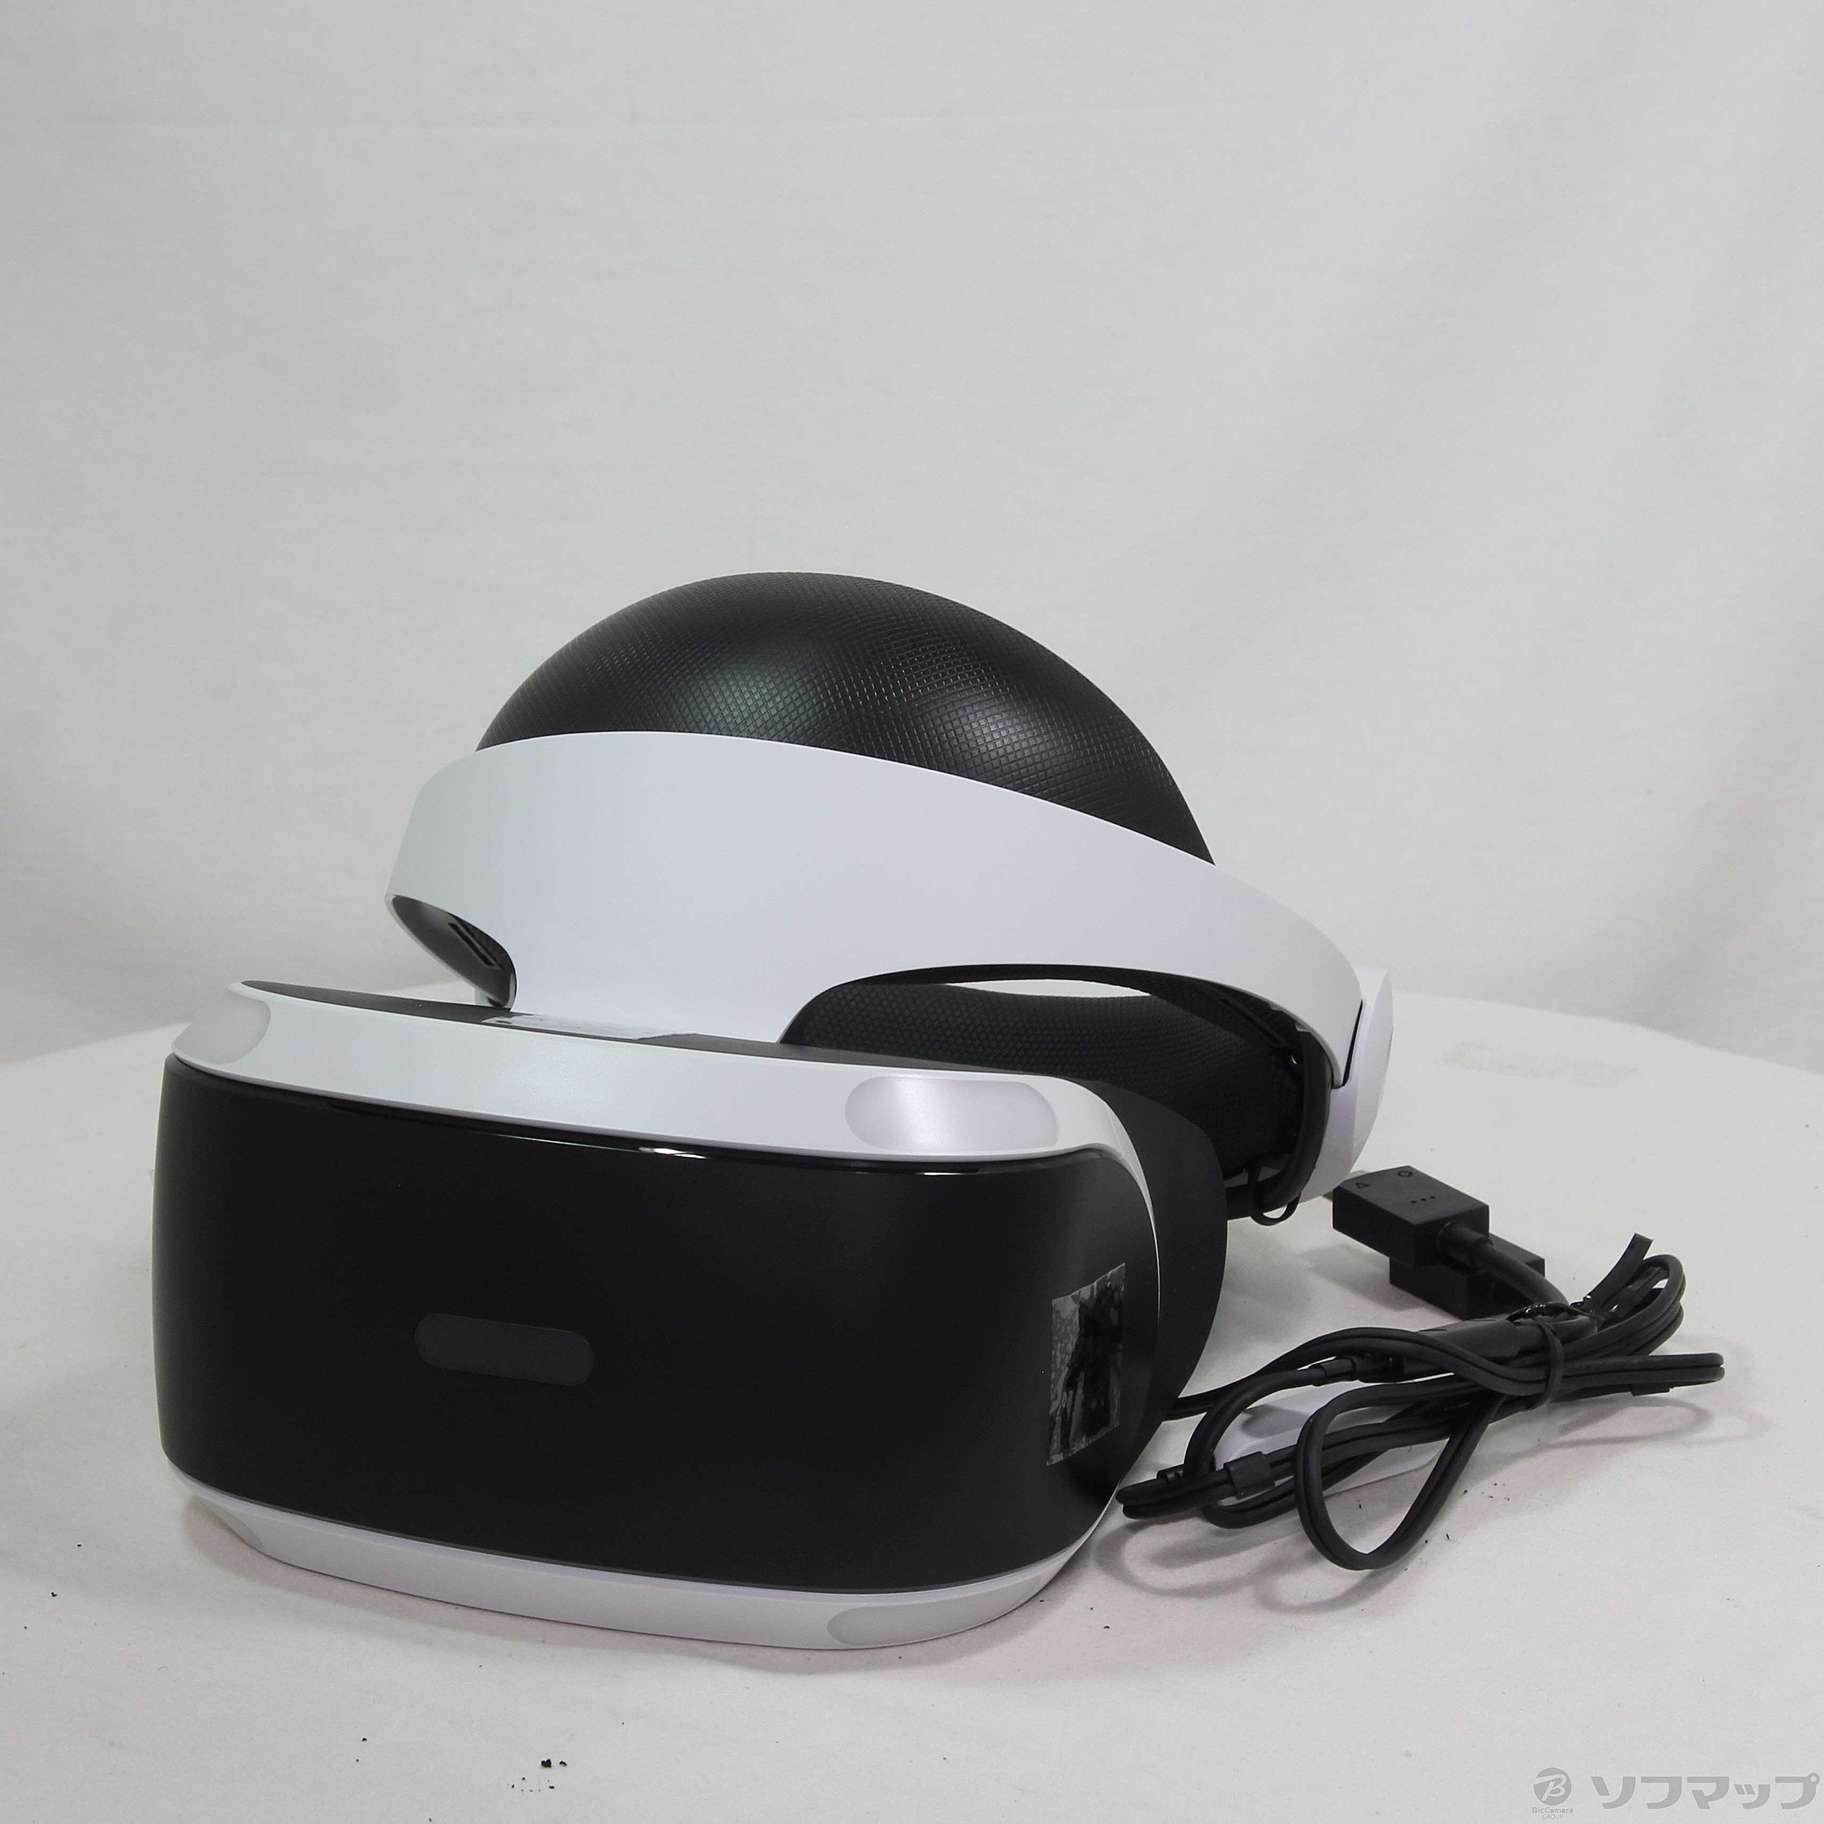 【美品】PlayStation VR Camera同梱版 CUHJ-16001